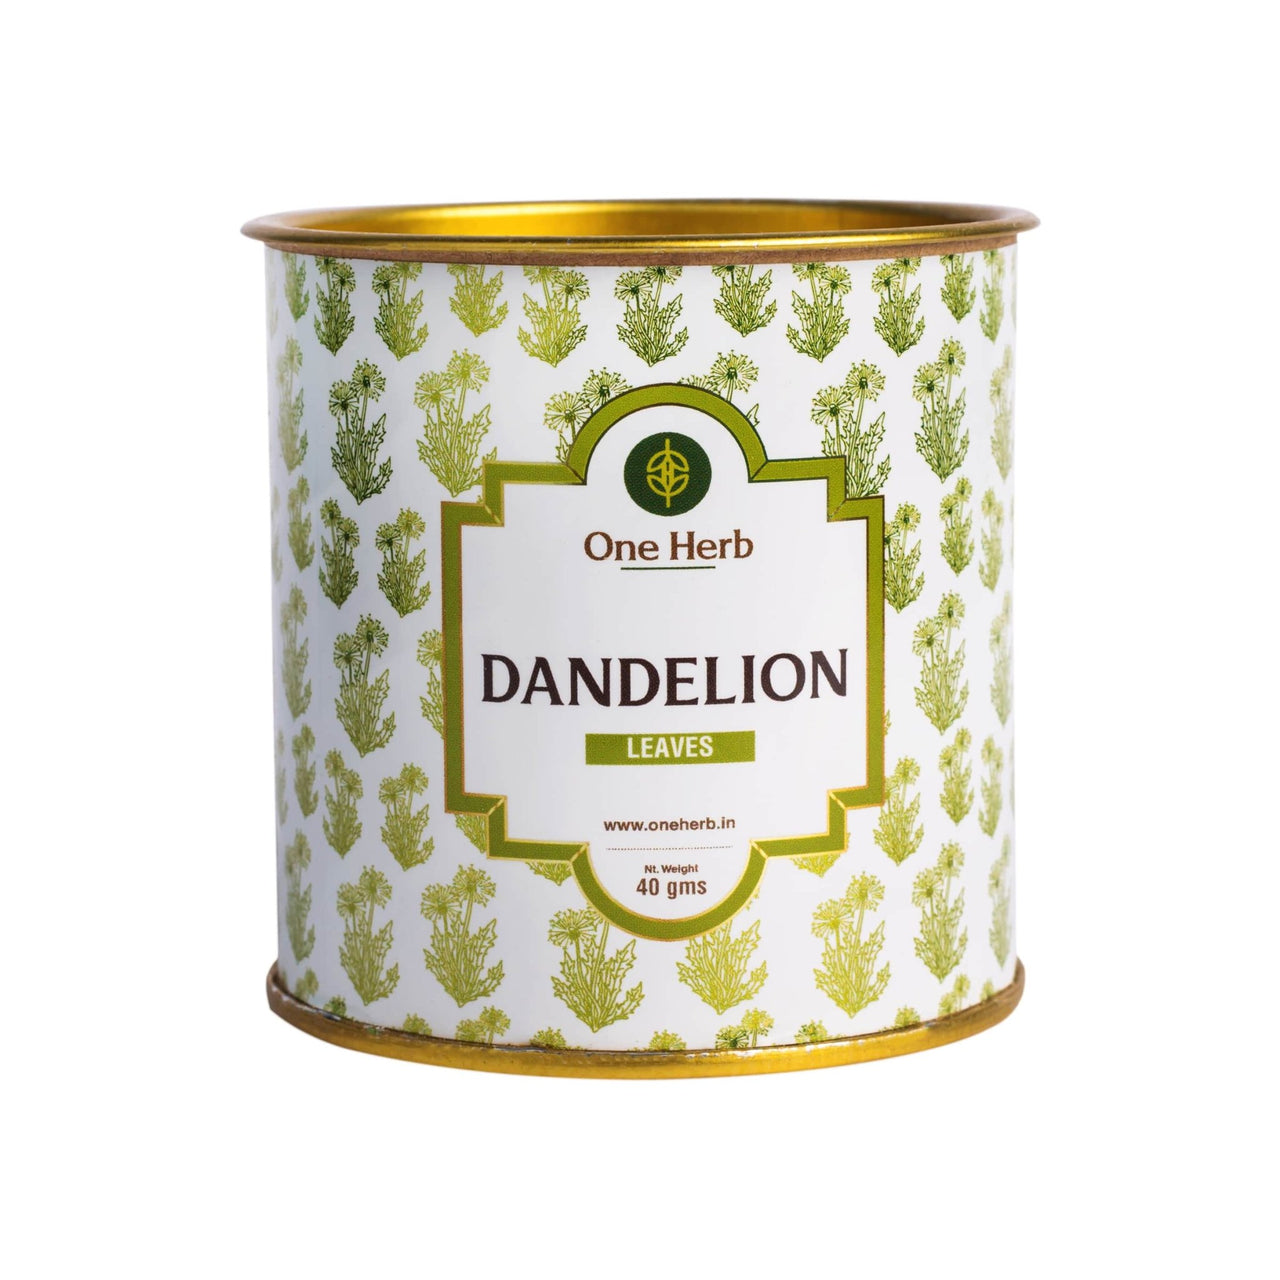 One Herb - Dandelion Leaves - CBD Store India